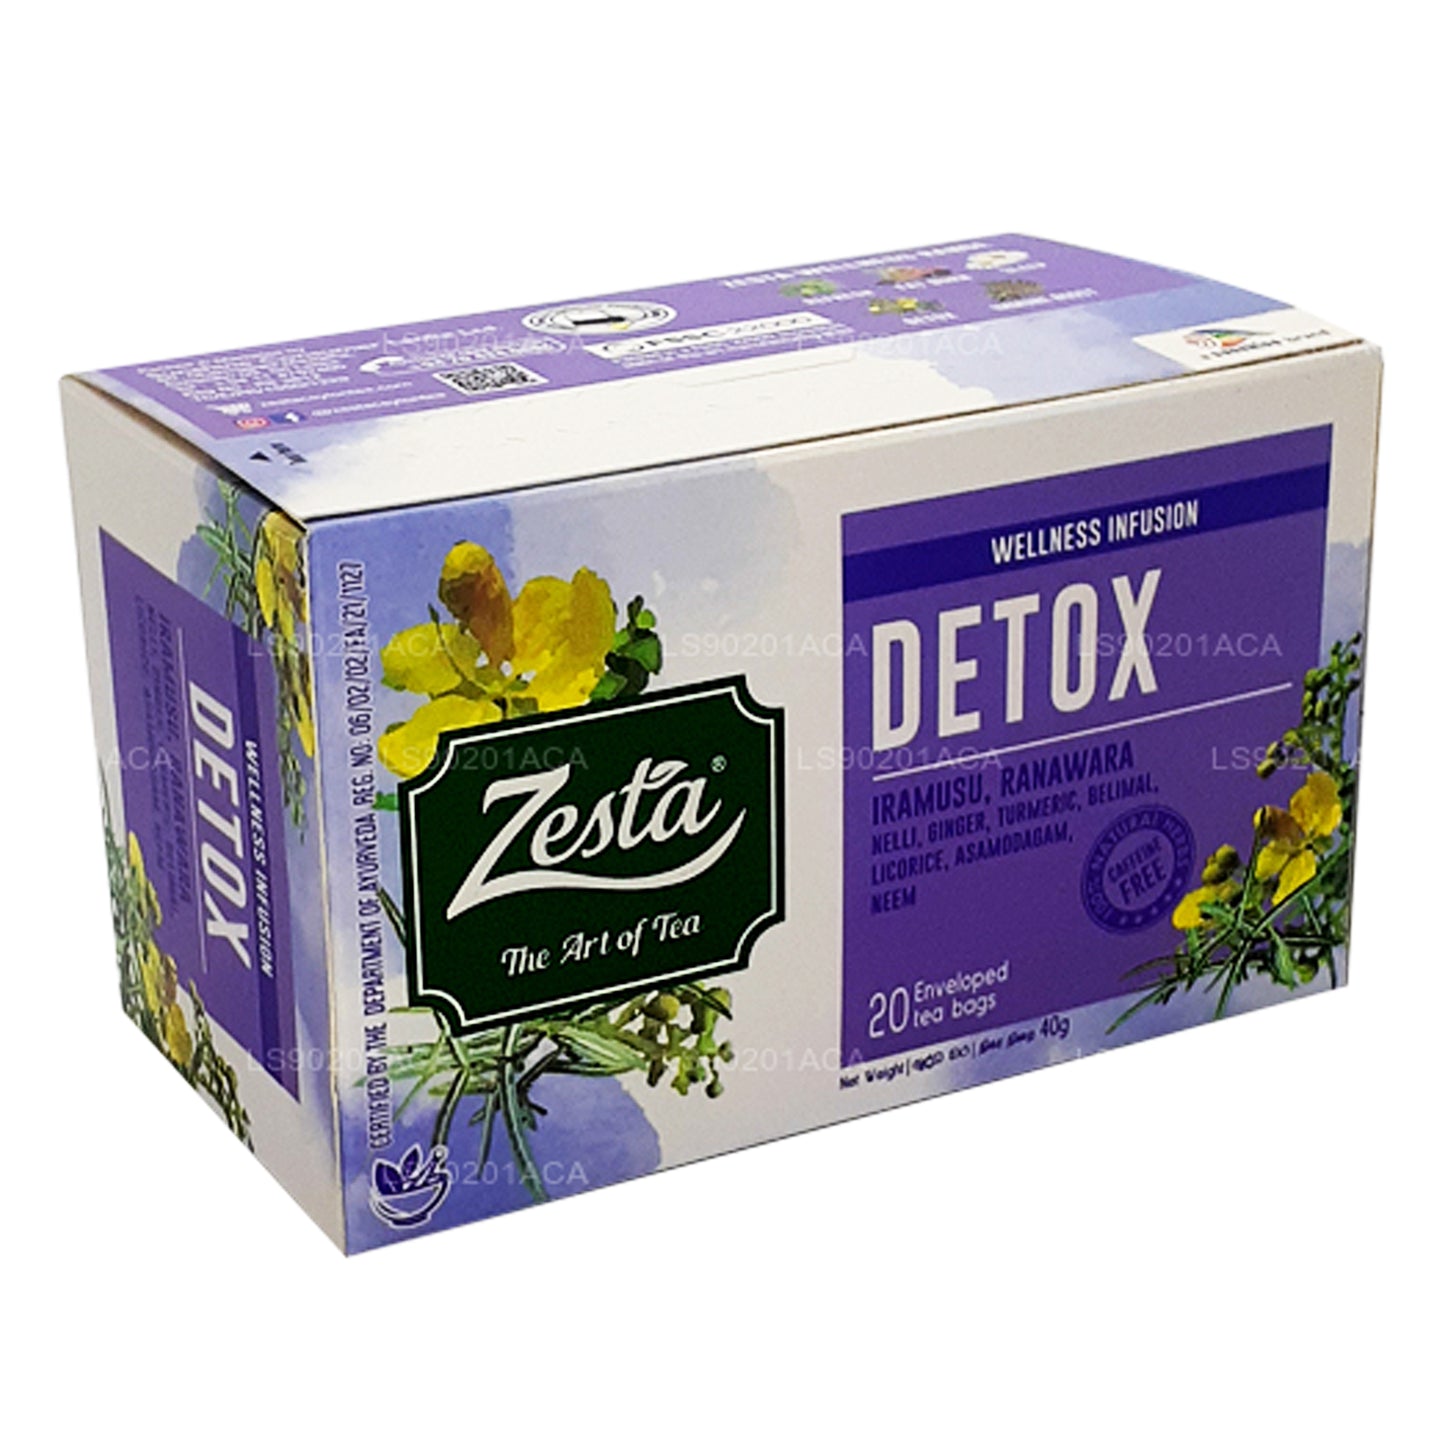 Zesta Detox Iramusu, Ranawara (40 g), 20 bolsitas de té